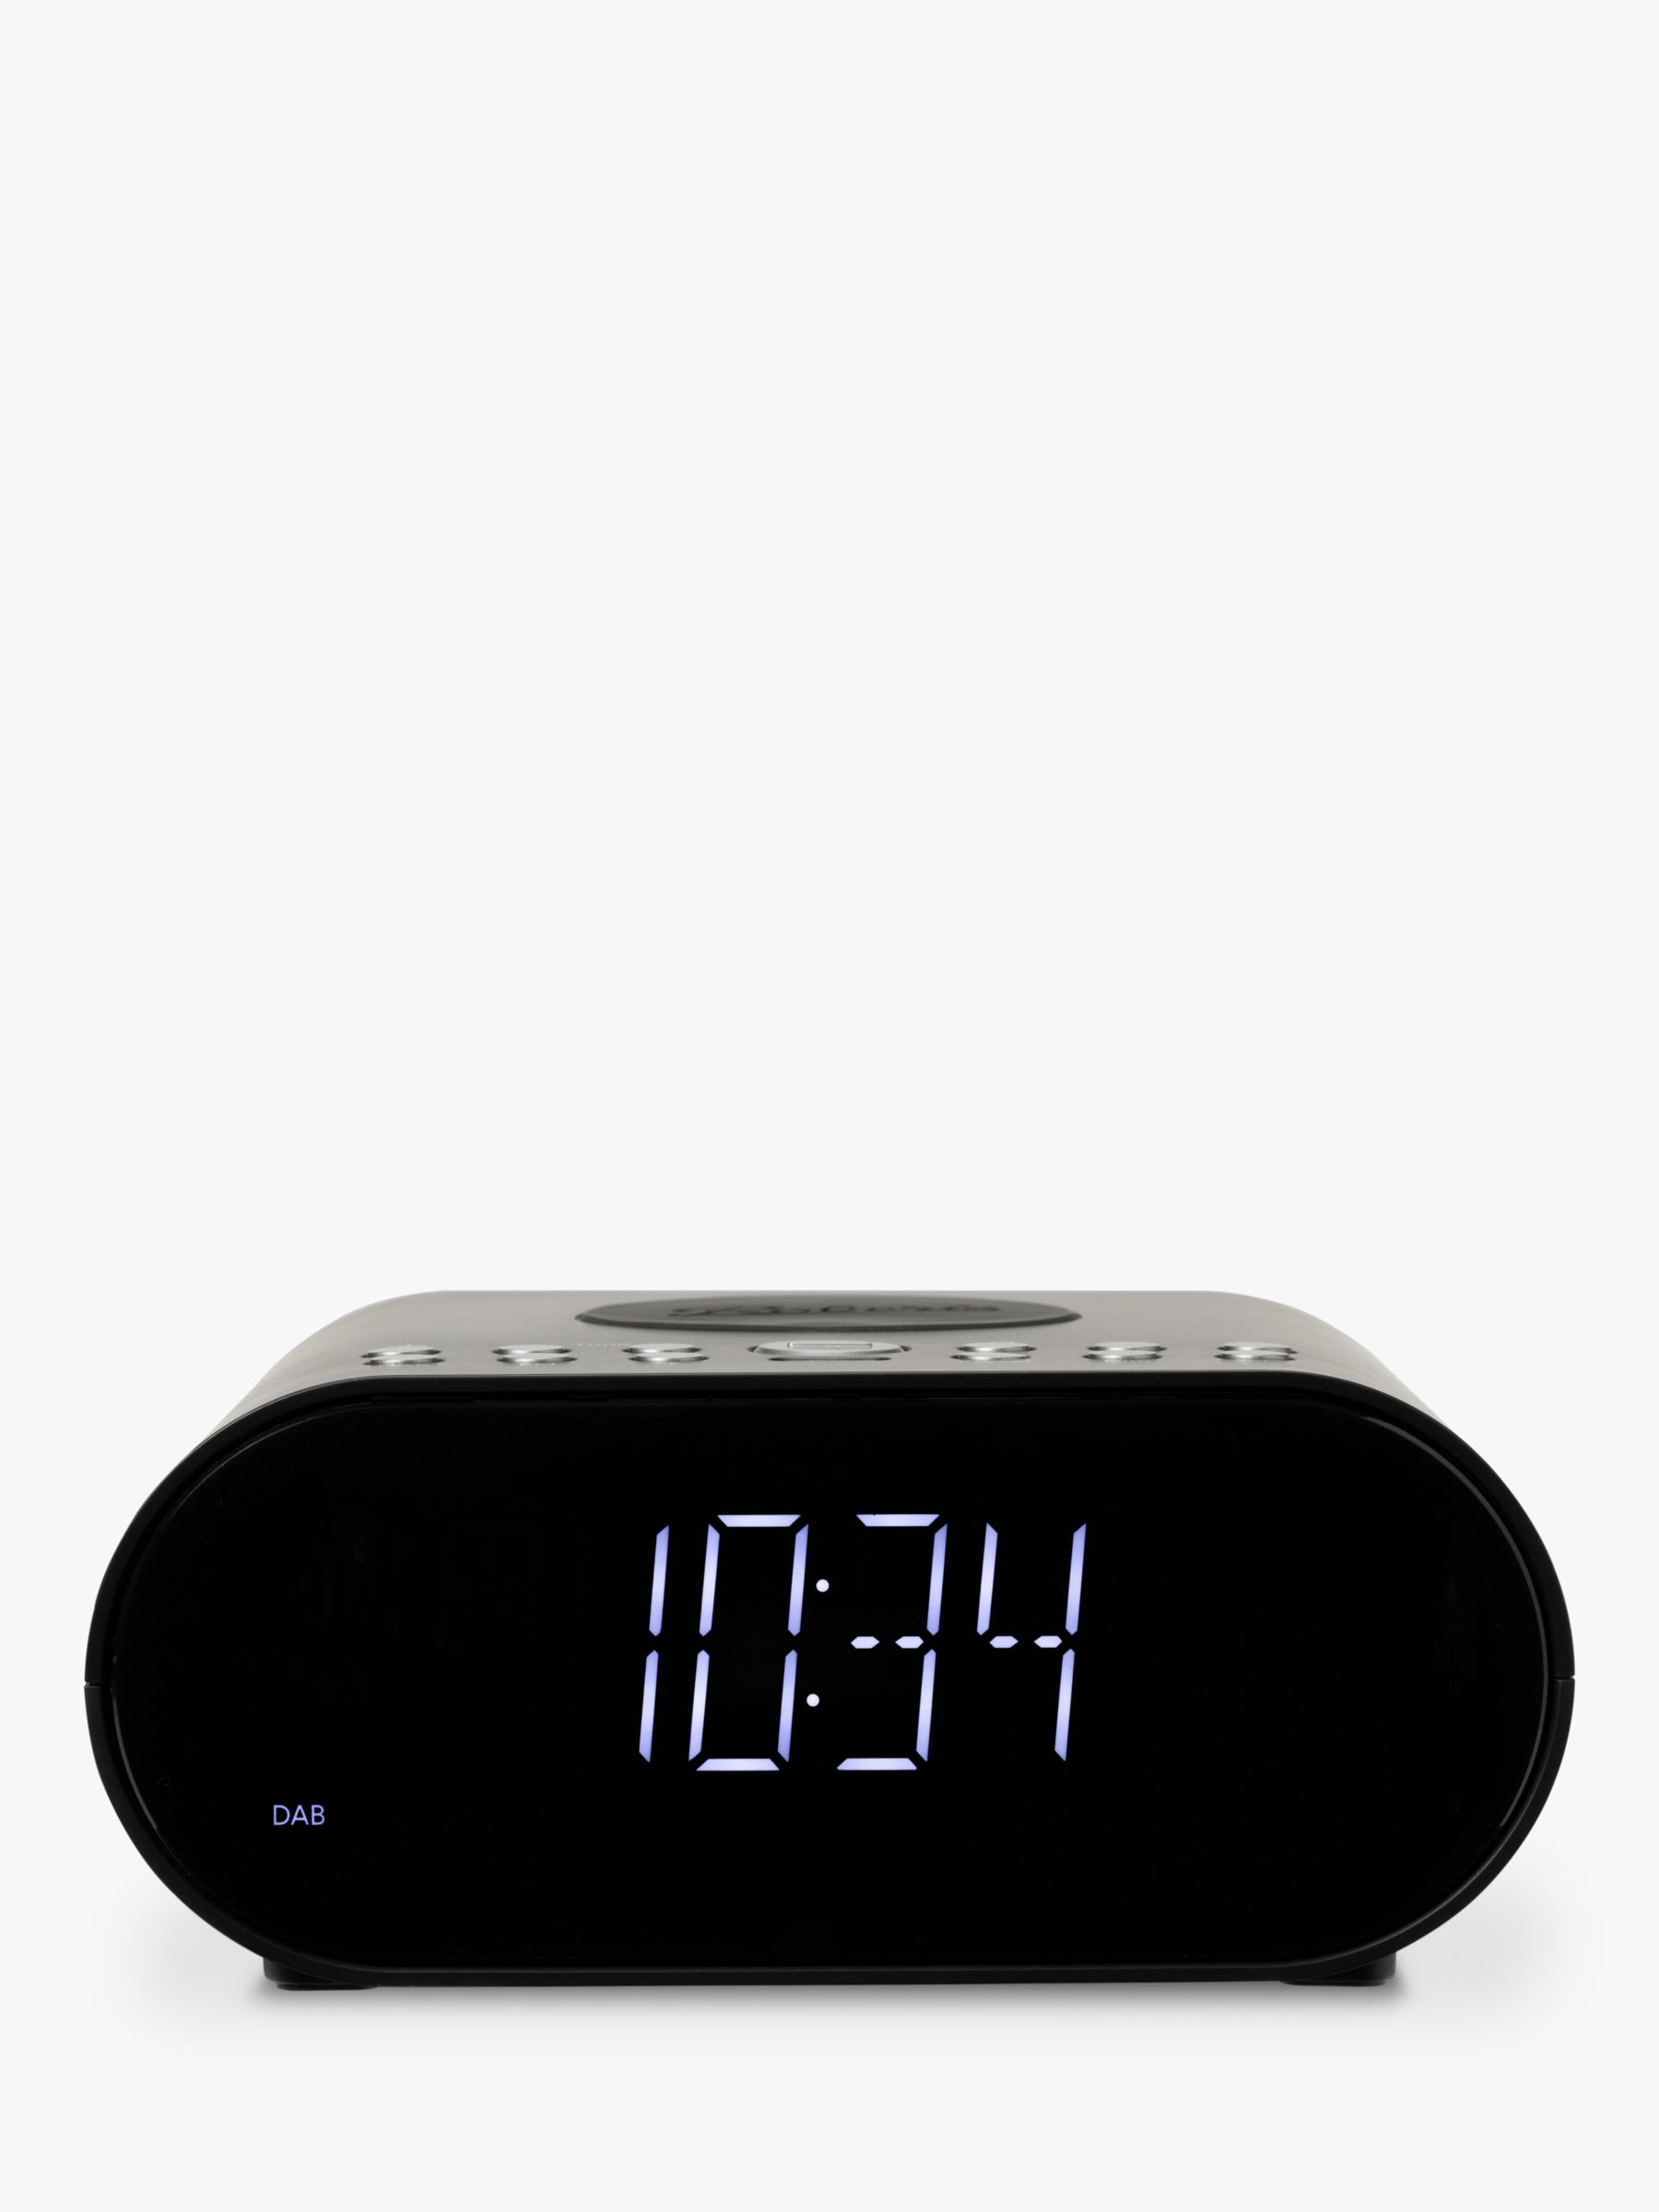 Roberts Ortus Charge DAB/DAB+/FM Digital Alarm Clock Radio